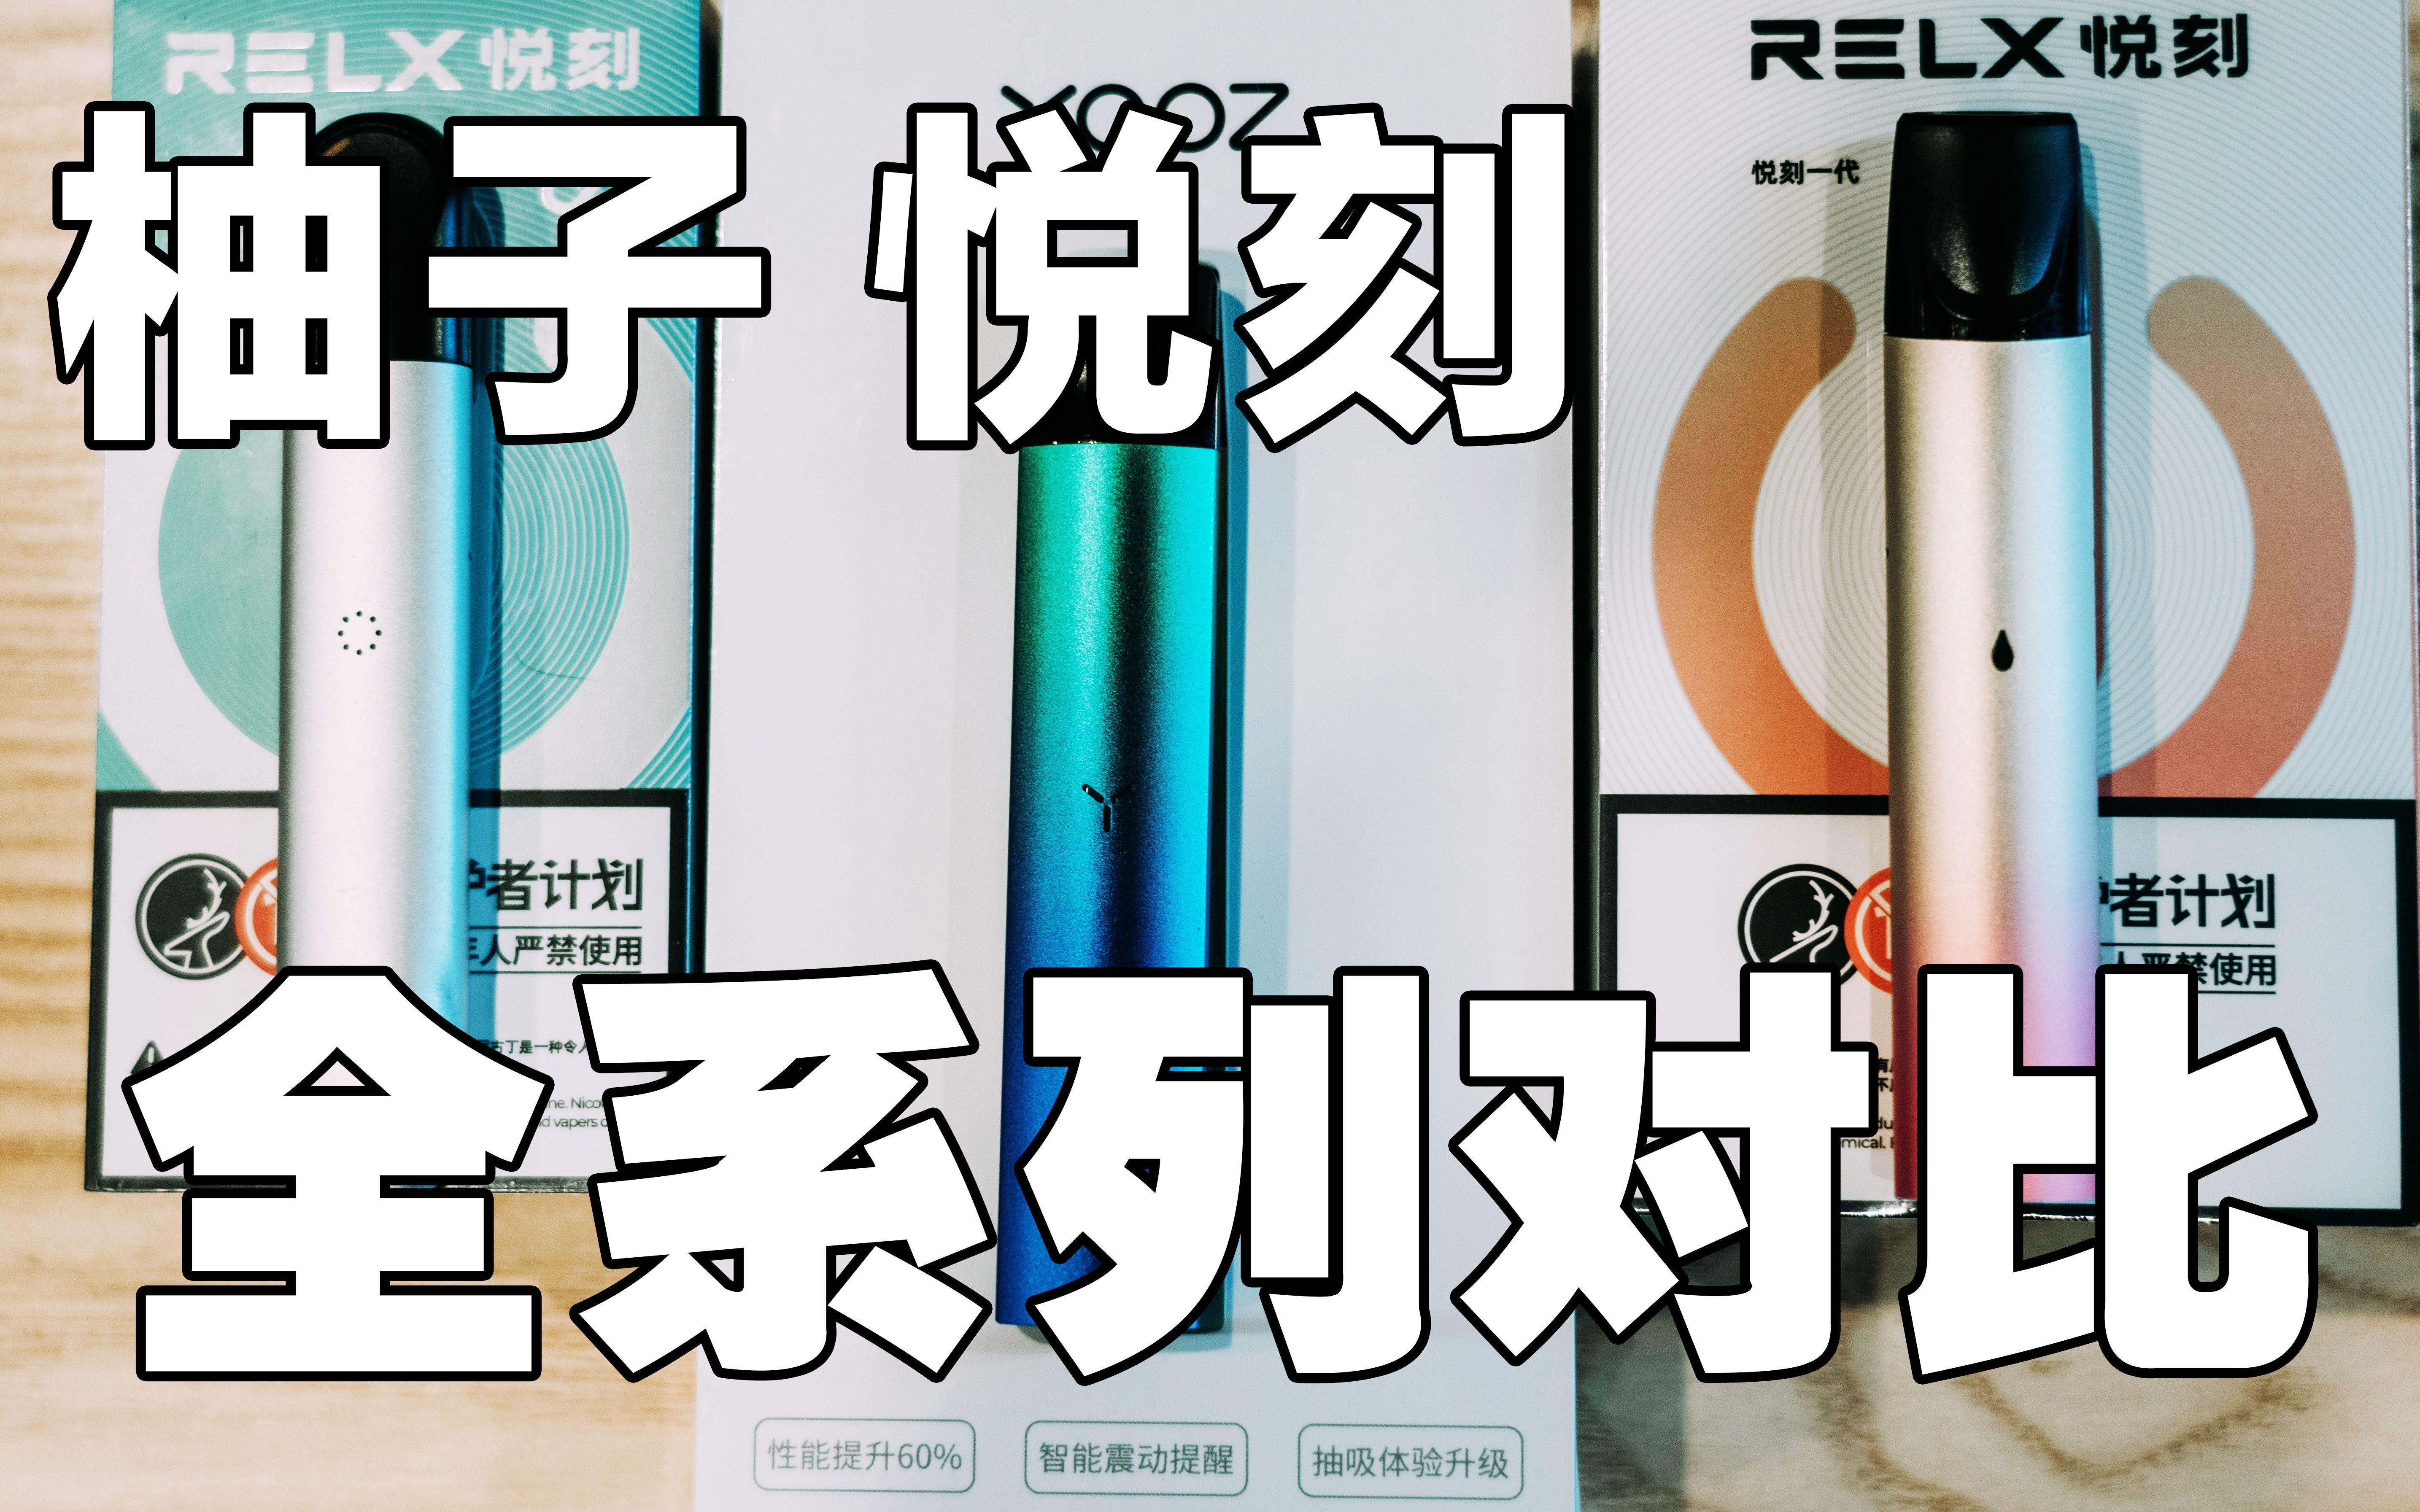 【yooz柚子 relx悦刻】两大电子烟开箱对比,超多干货!